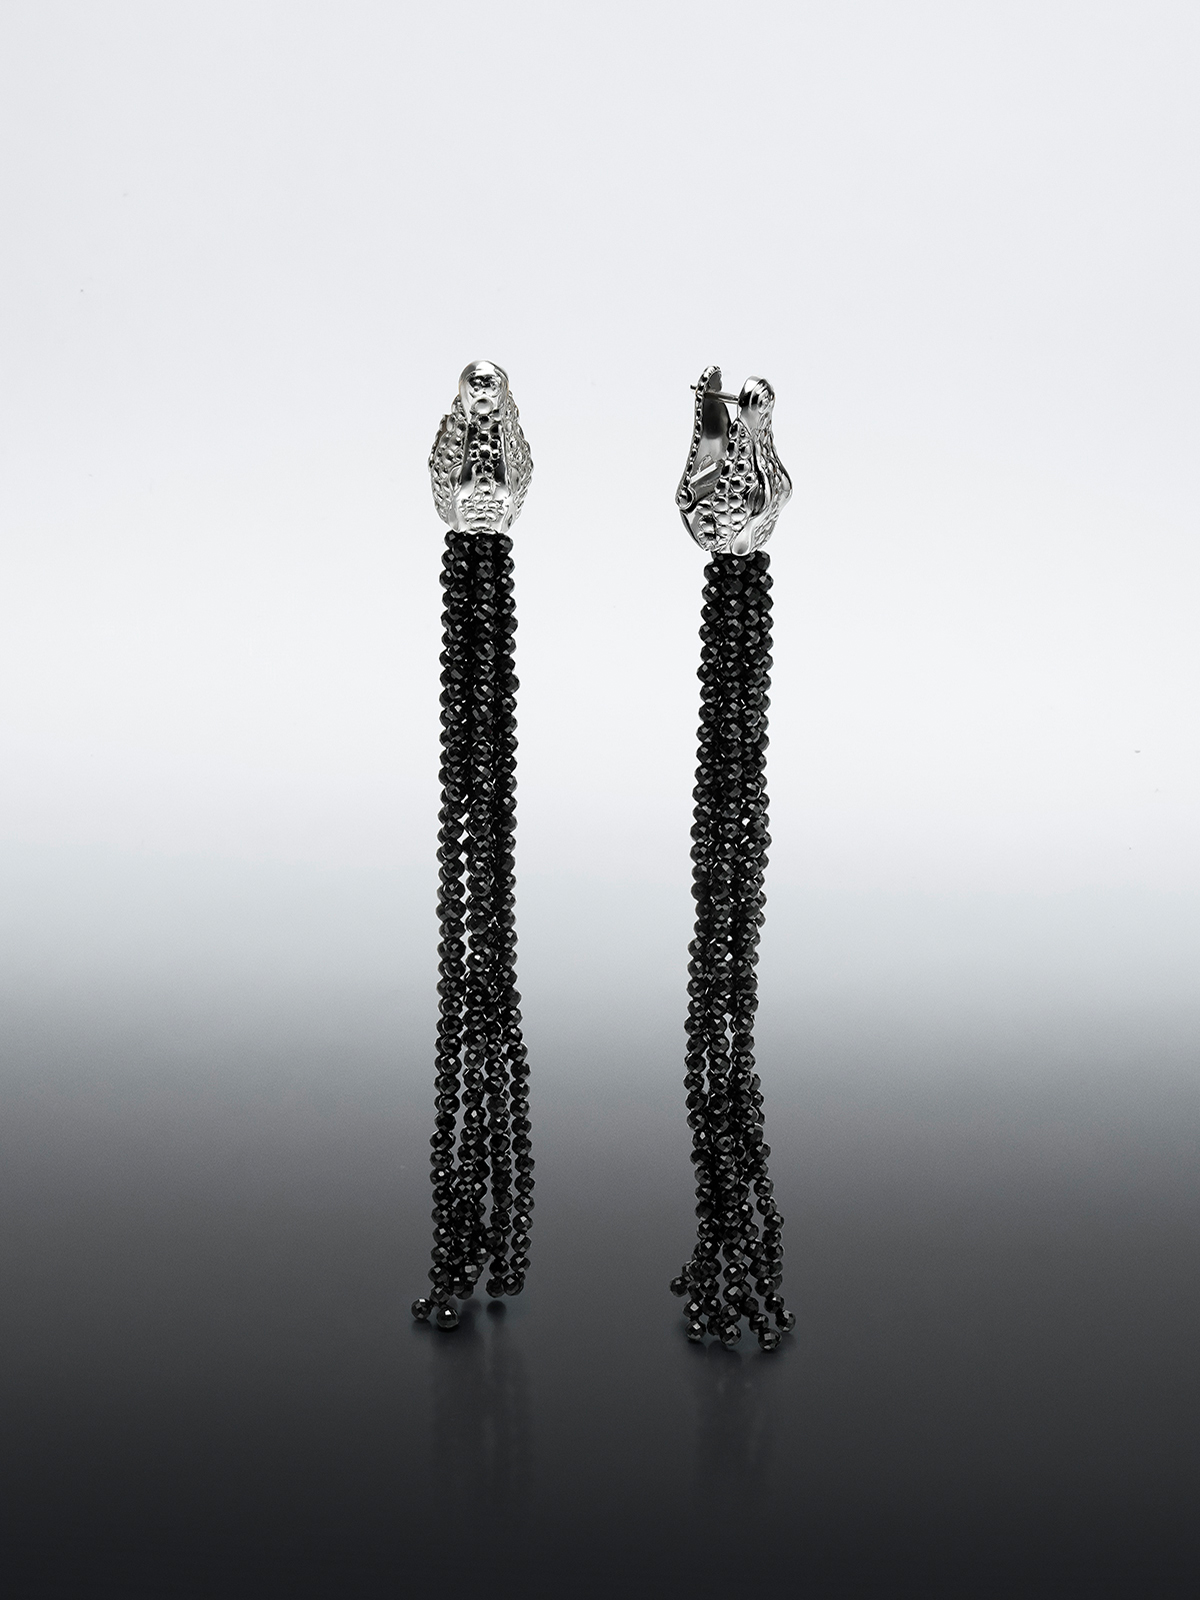 Long 925 silver earrings shaped like a crocodile and black spine.